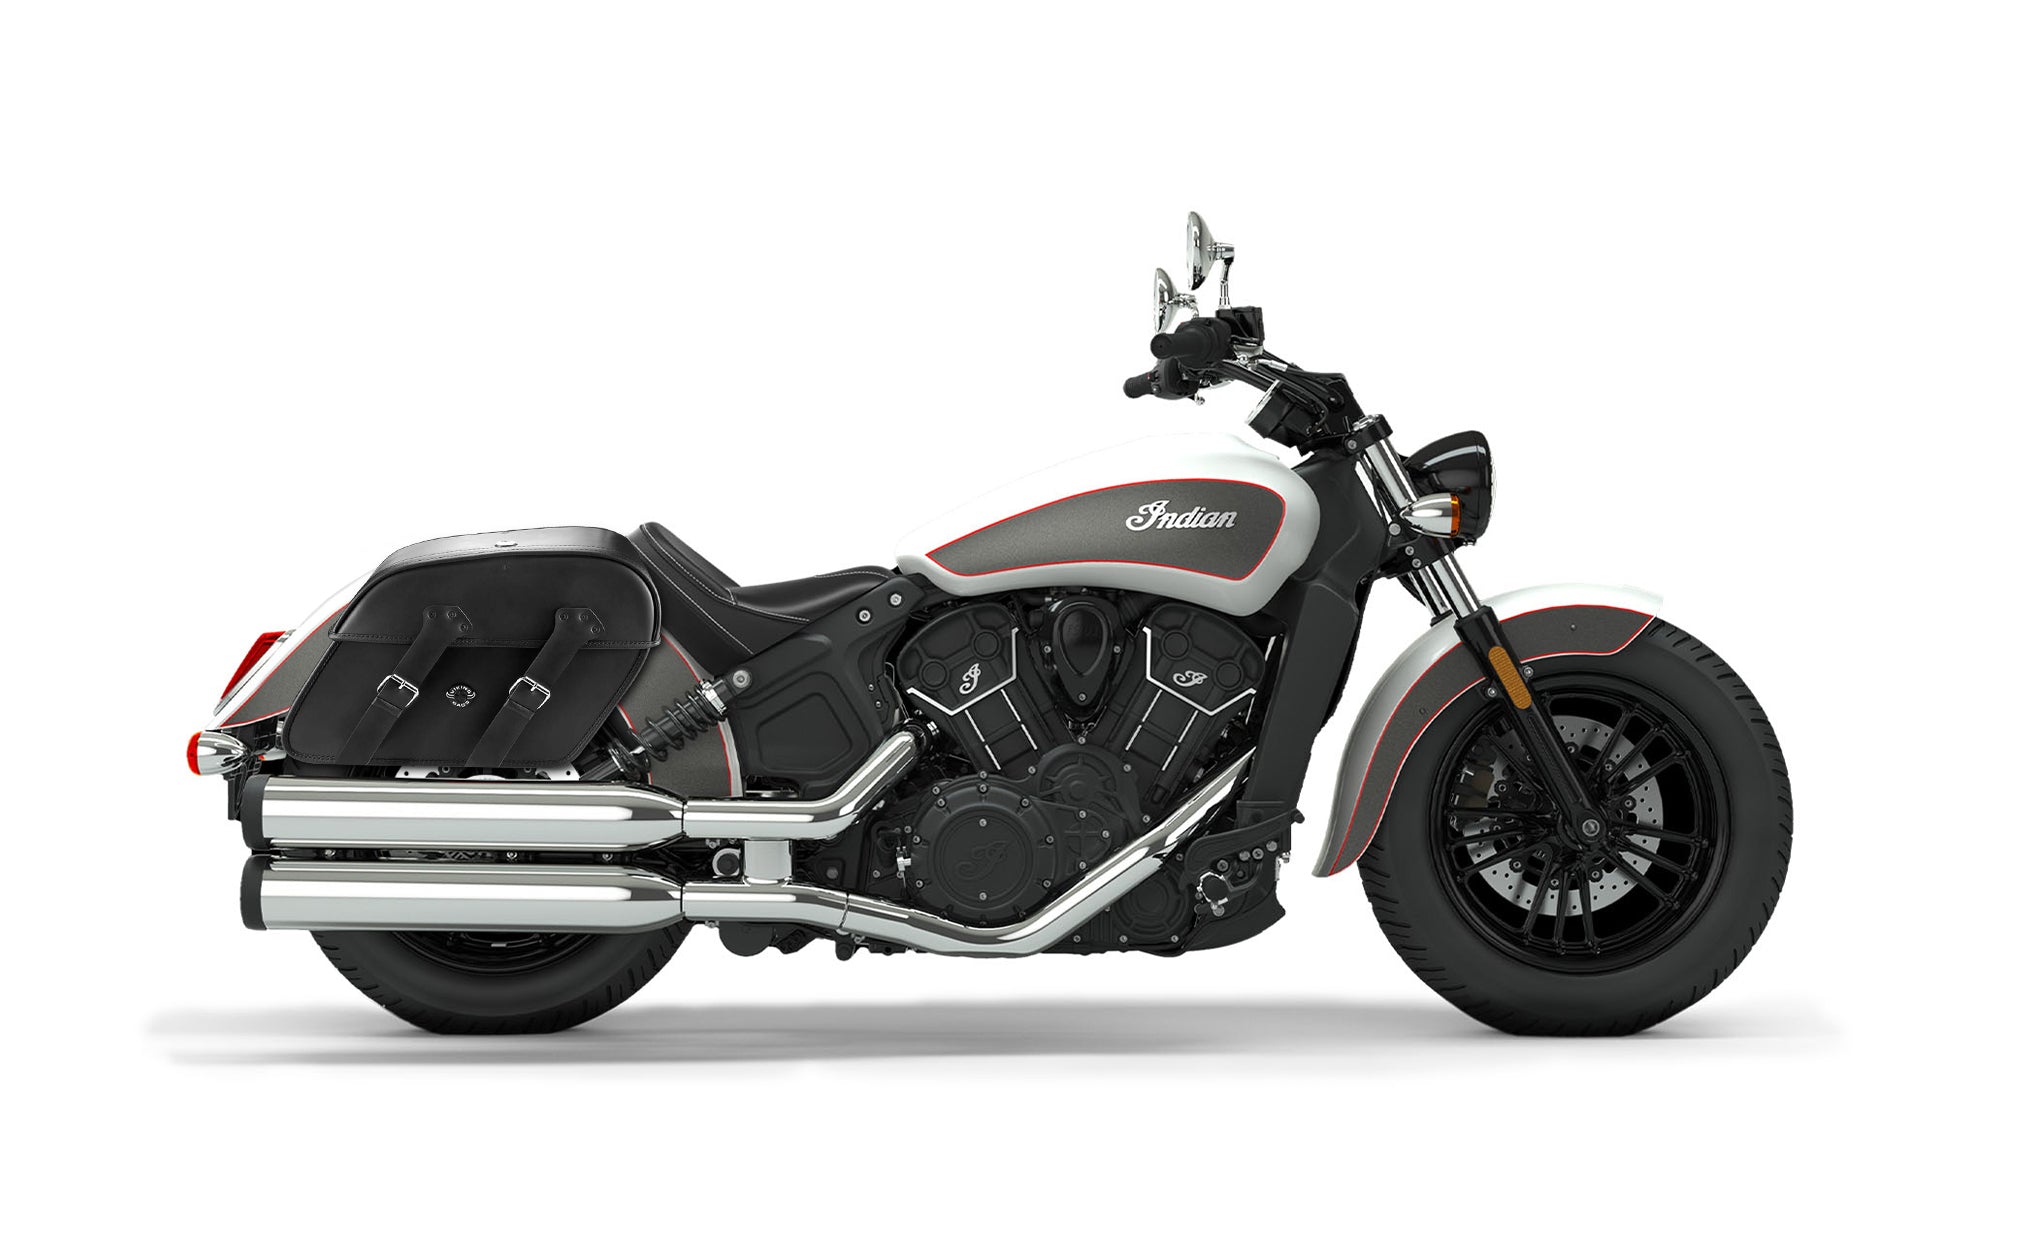 Viking Raven Extra Large Indian Scout Sixty Leather Motorcycle Saddlebags on Bike Photo @expand